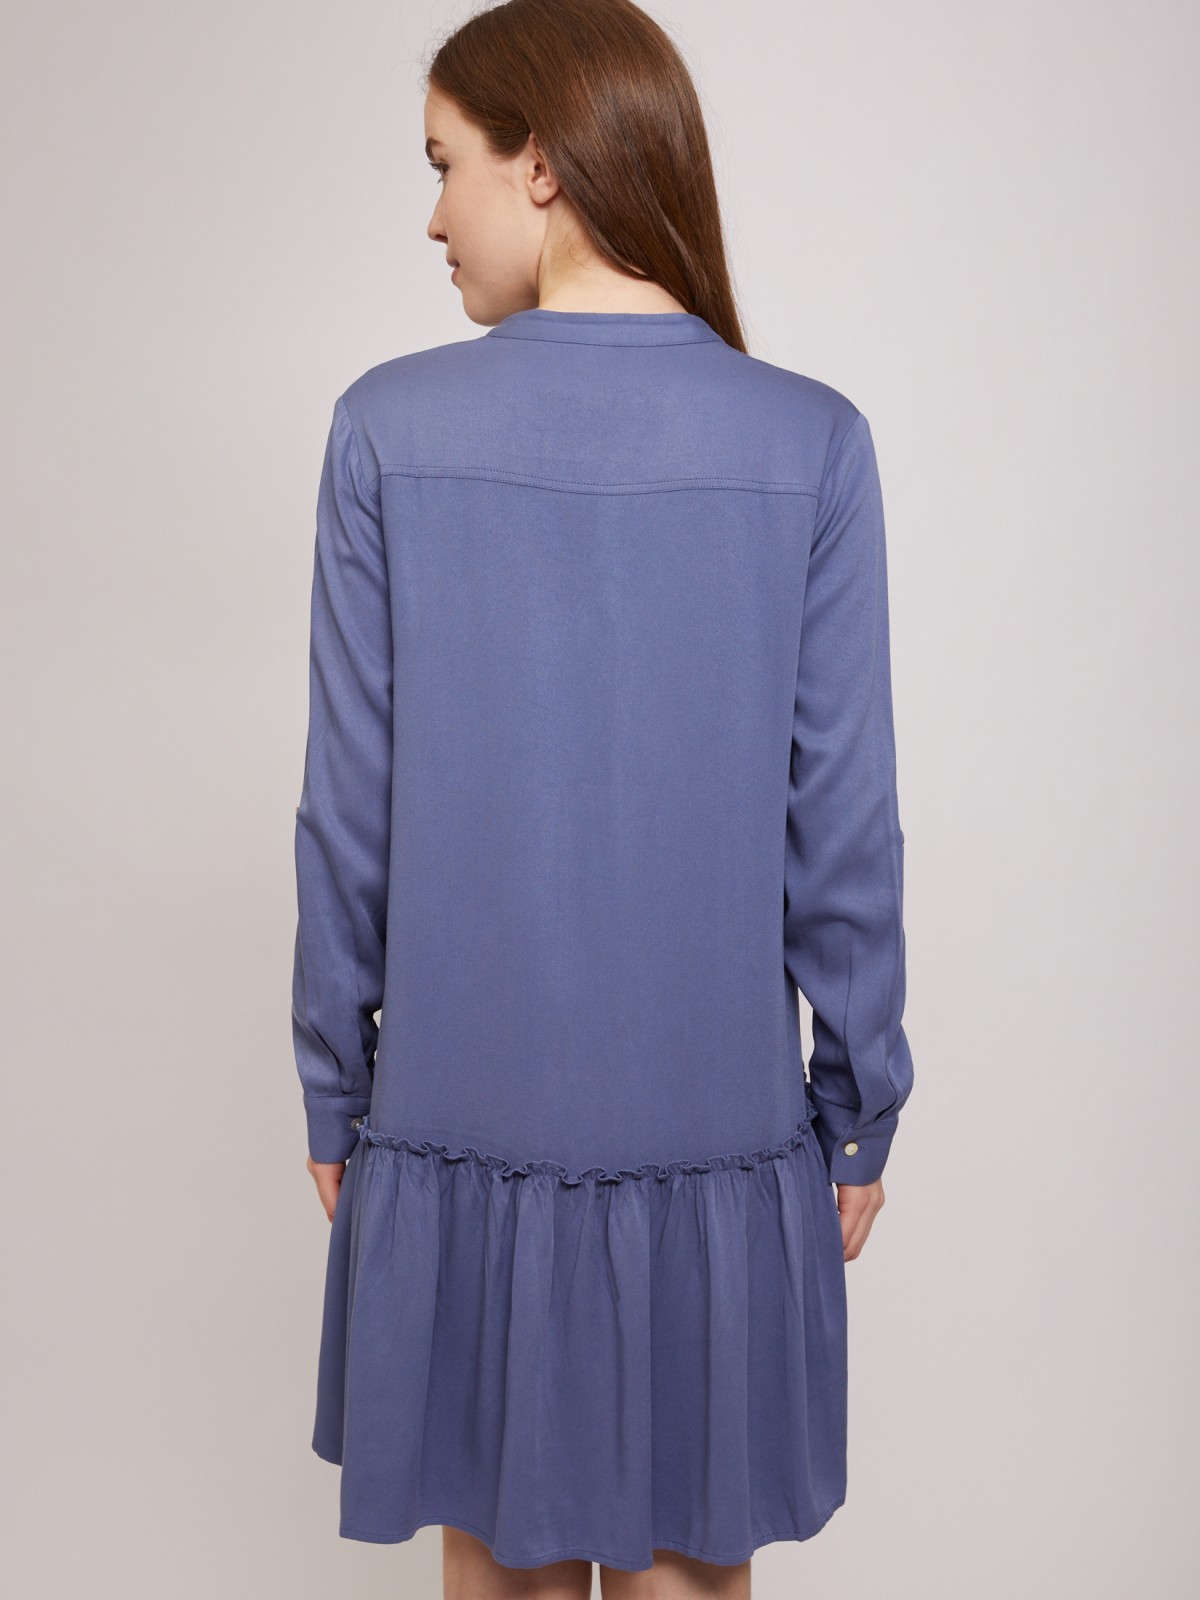 Платье-рубашка zolla 021218259053, цвет голубой, размер XS - фото 6